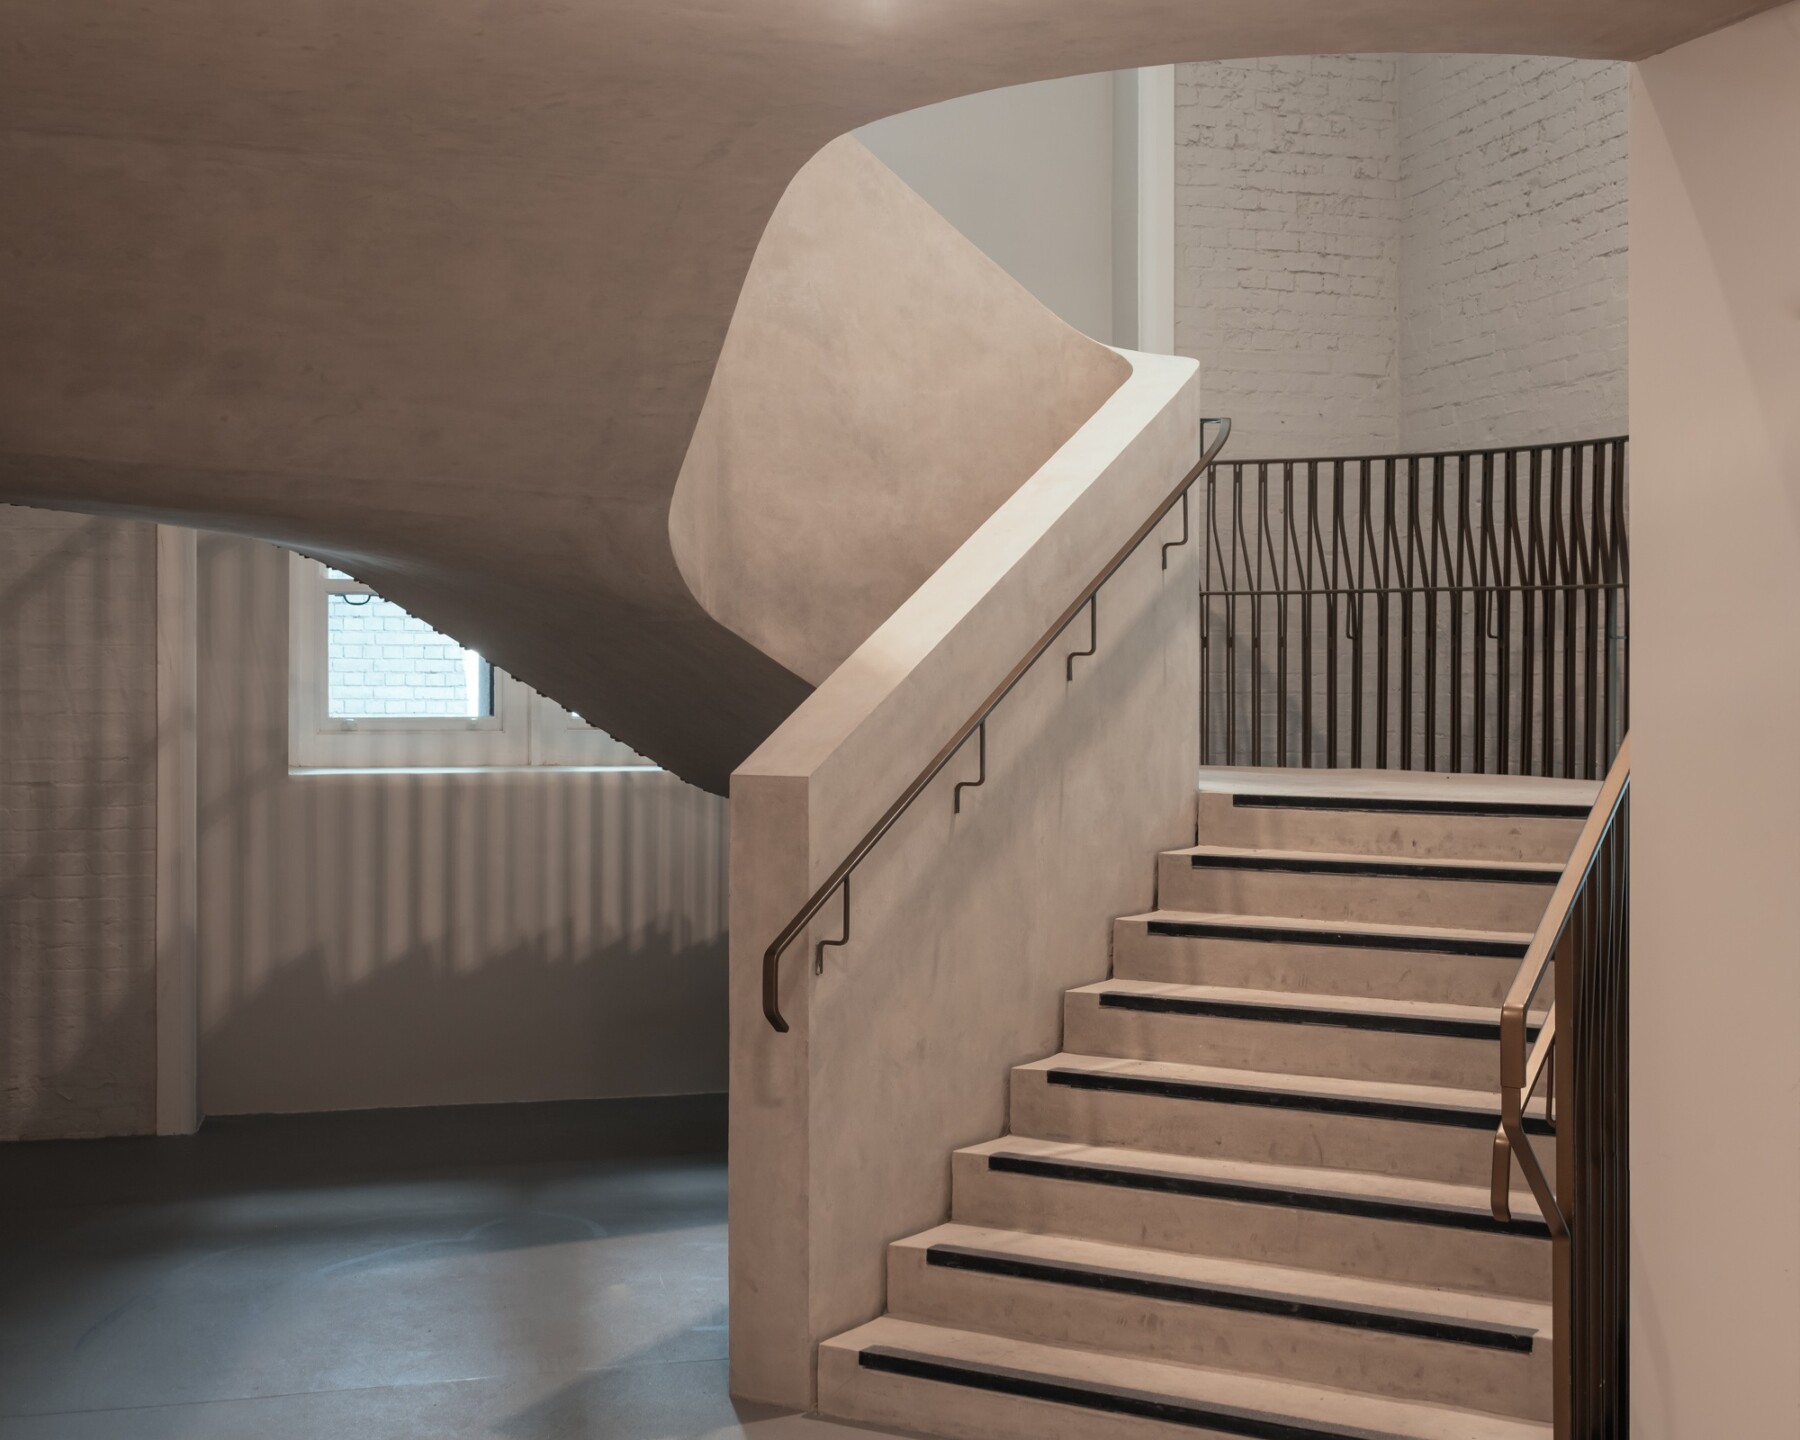 Jamie-Fobert-Architects-National-Portrait-Gallery-NPG-Learning-centre-stair-Jim-Stephenson-